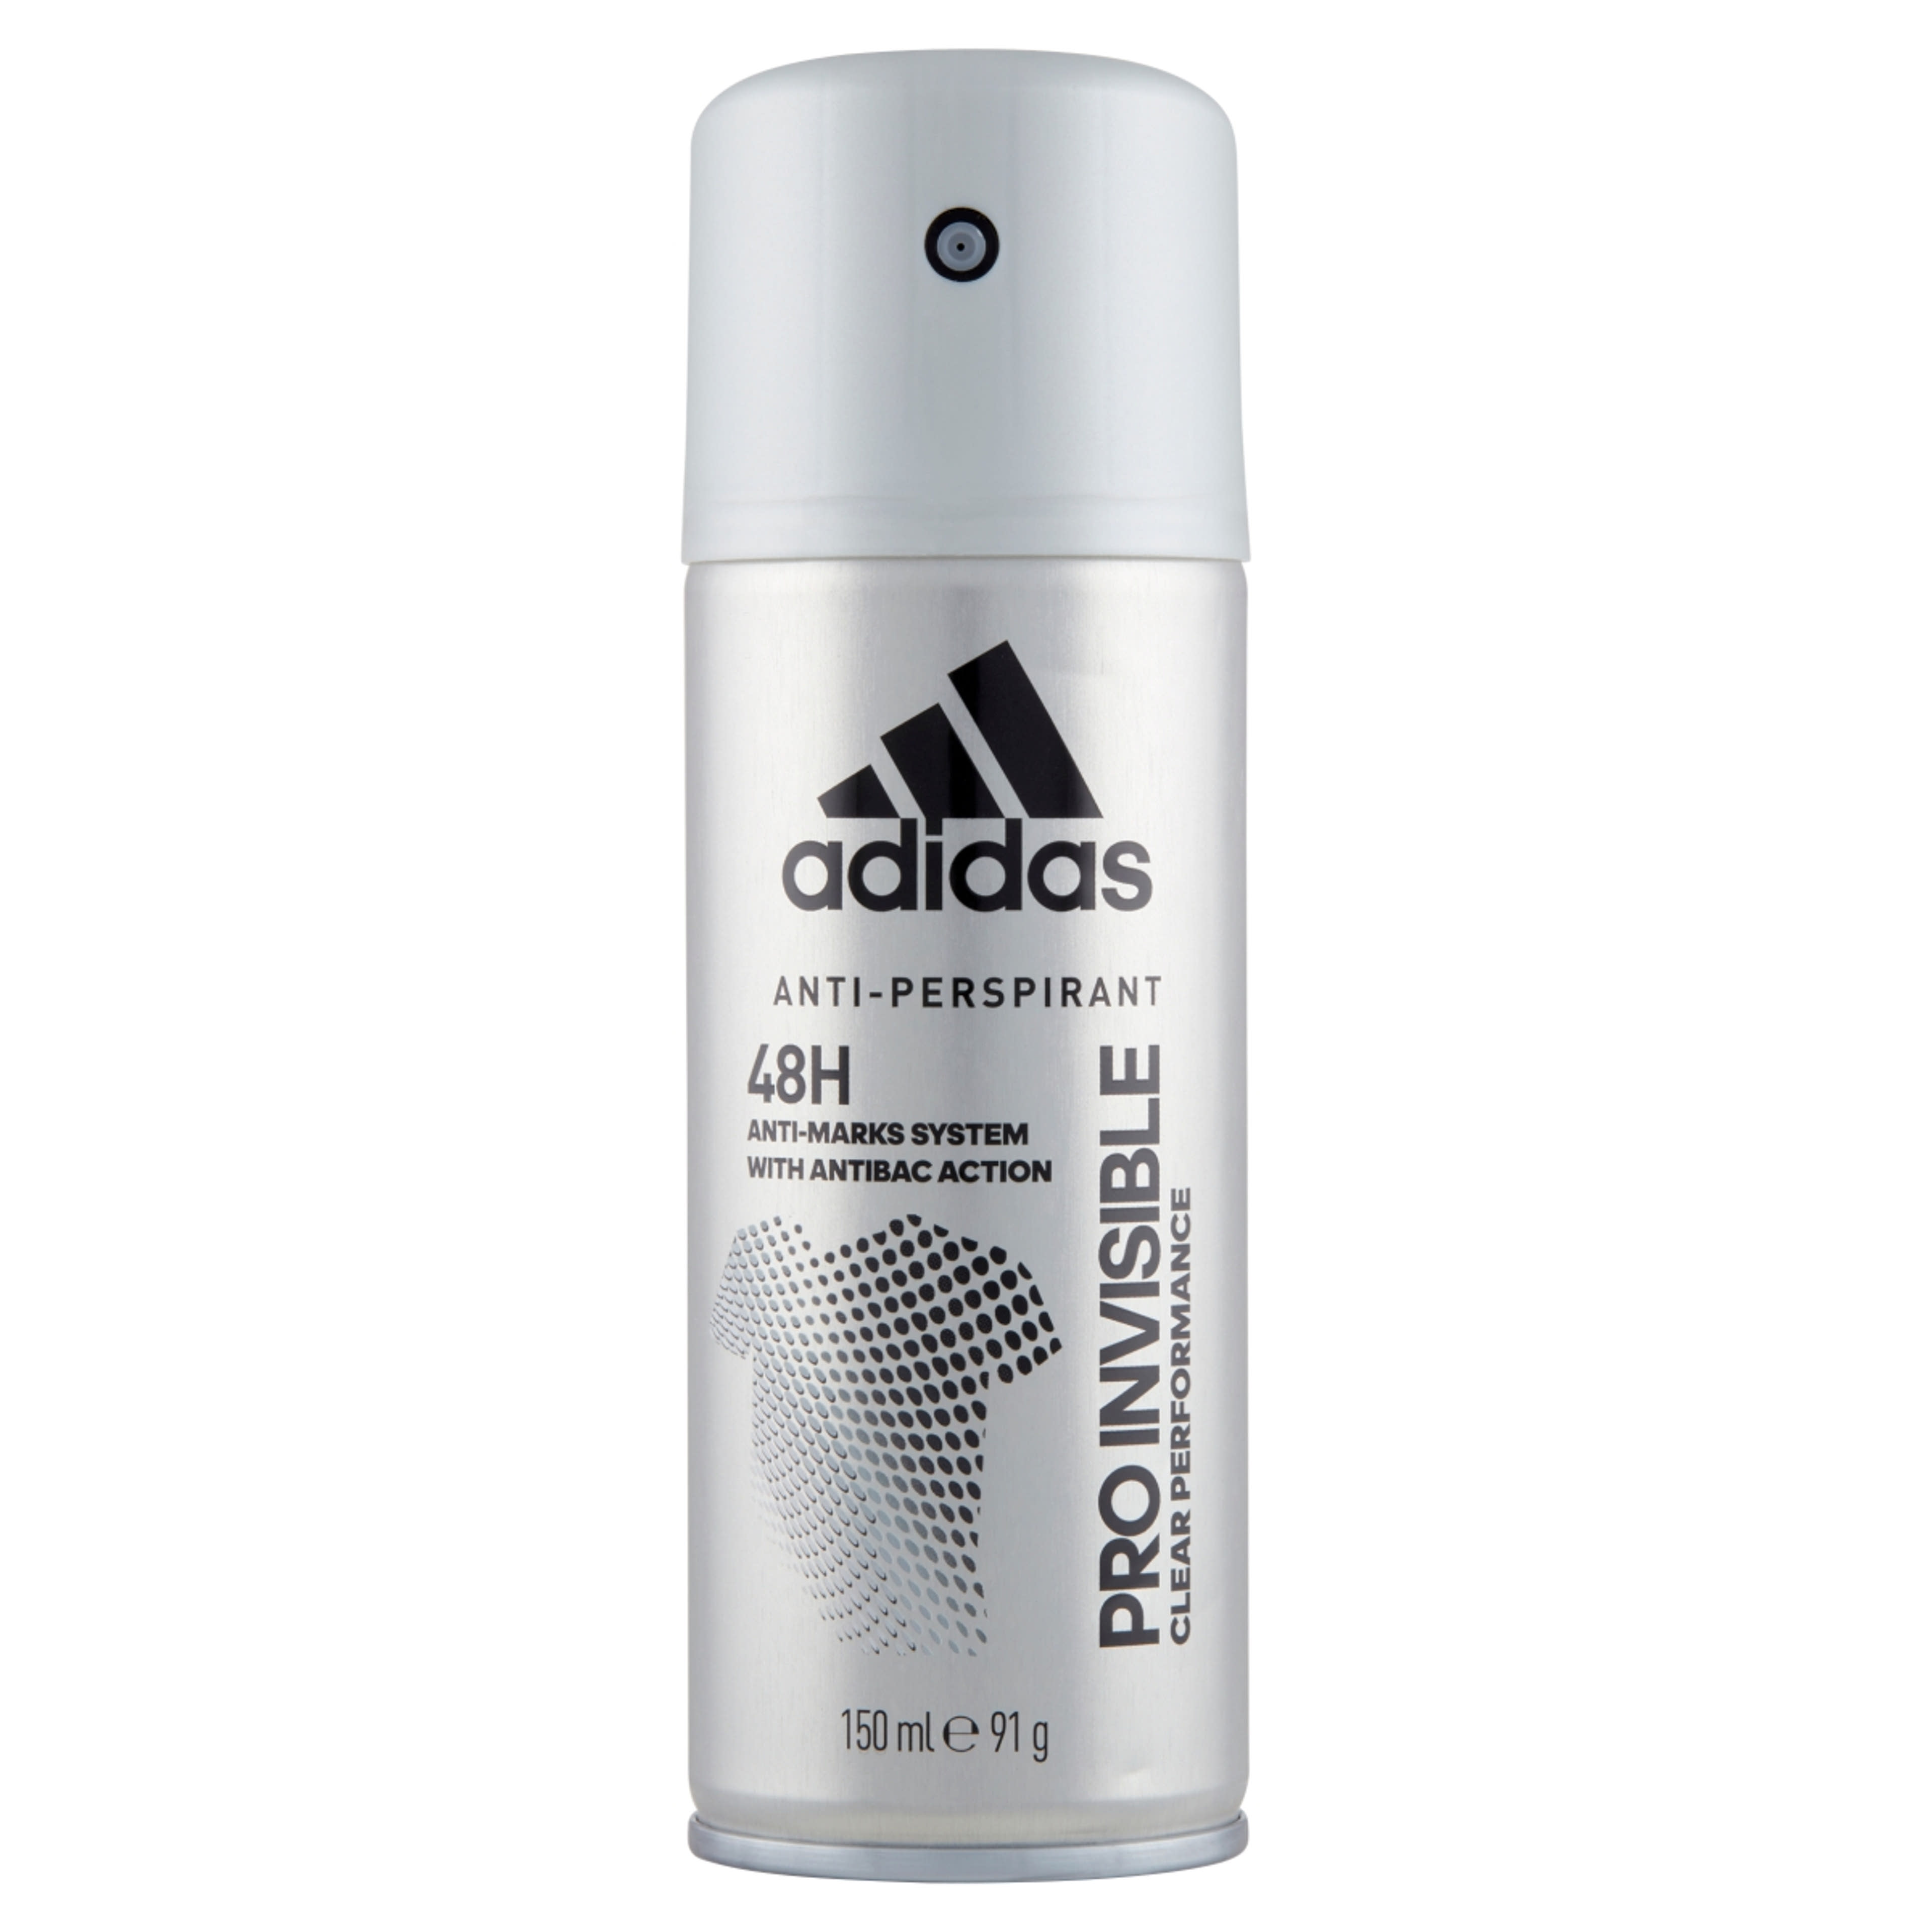 Adidas deodorant spray pro invisible férfi - 150 ml